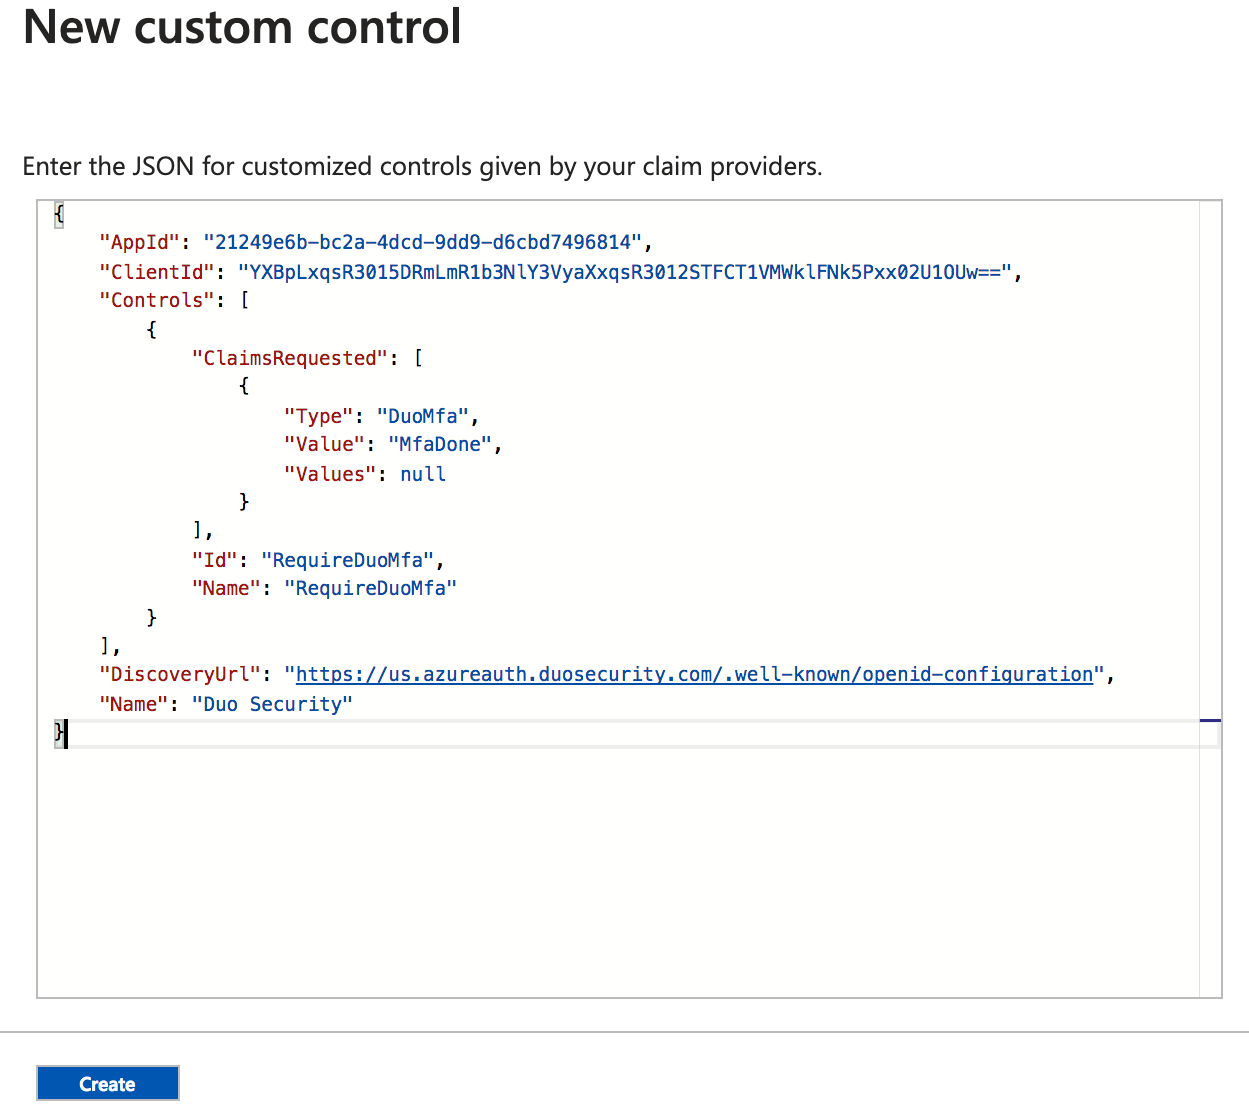 Duo Azure CA Custom Control JSON Input